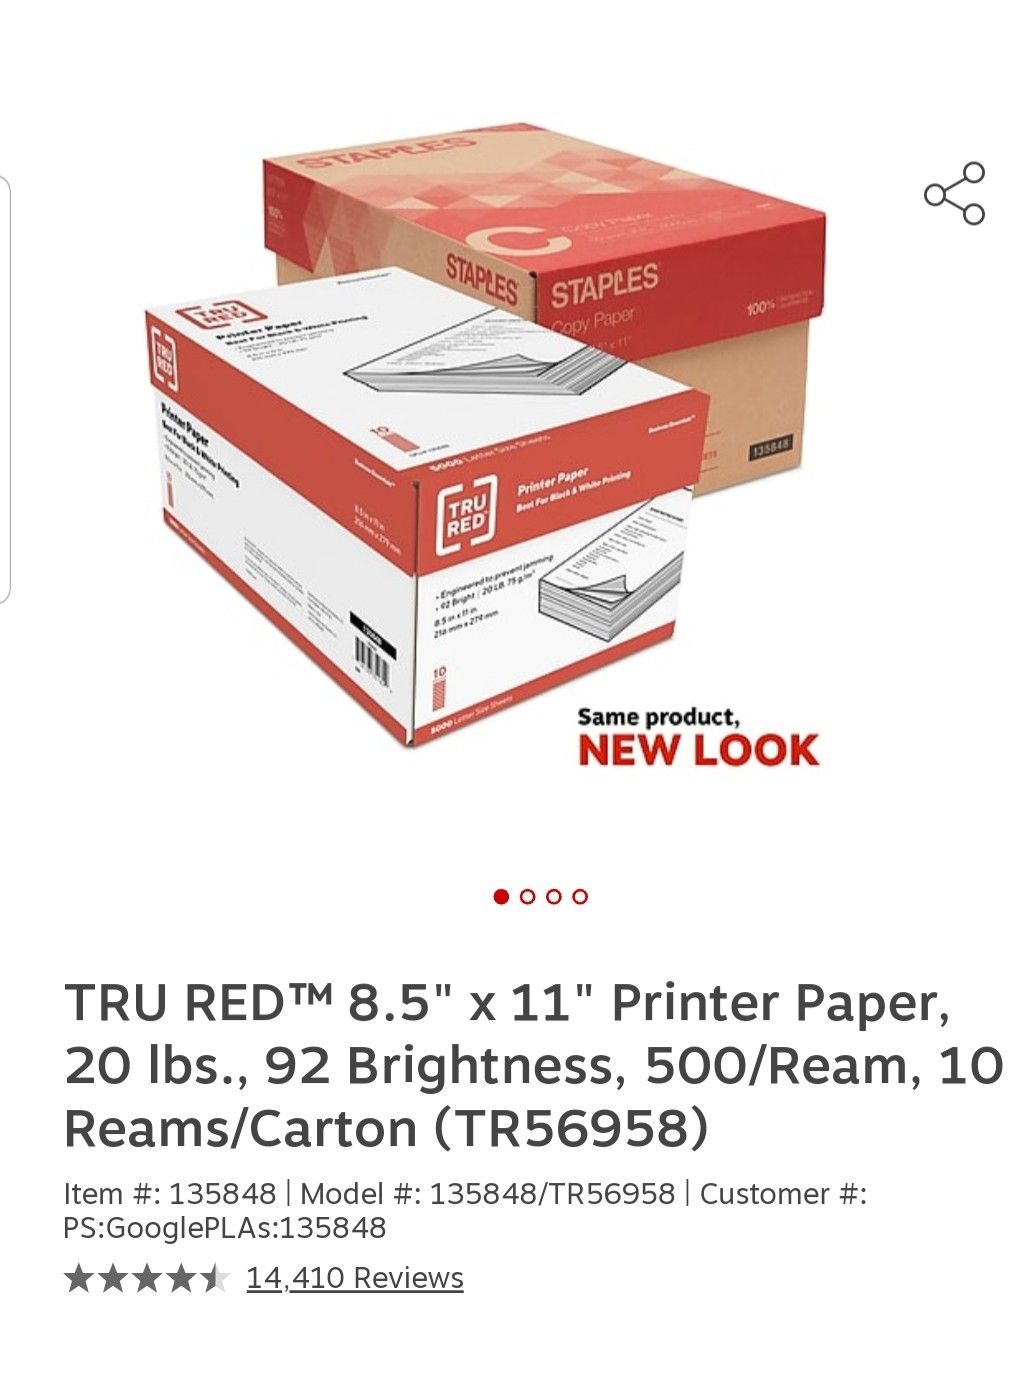 TRU RED™ 8.5" x 11" Printer Paper, 20 lbs